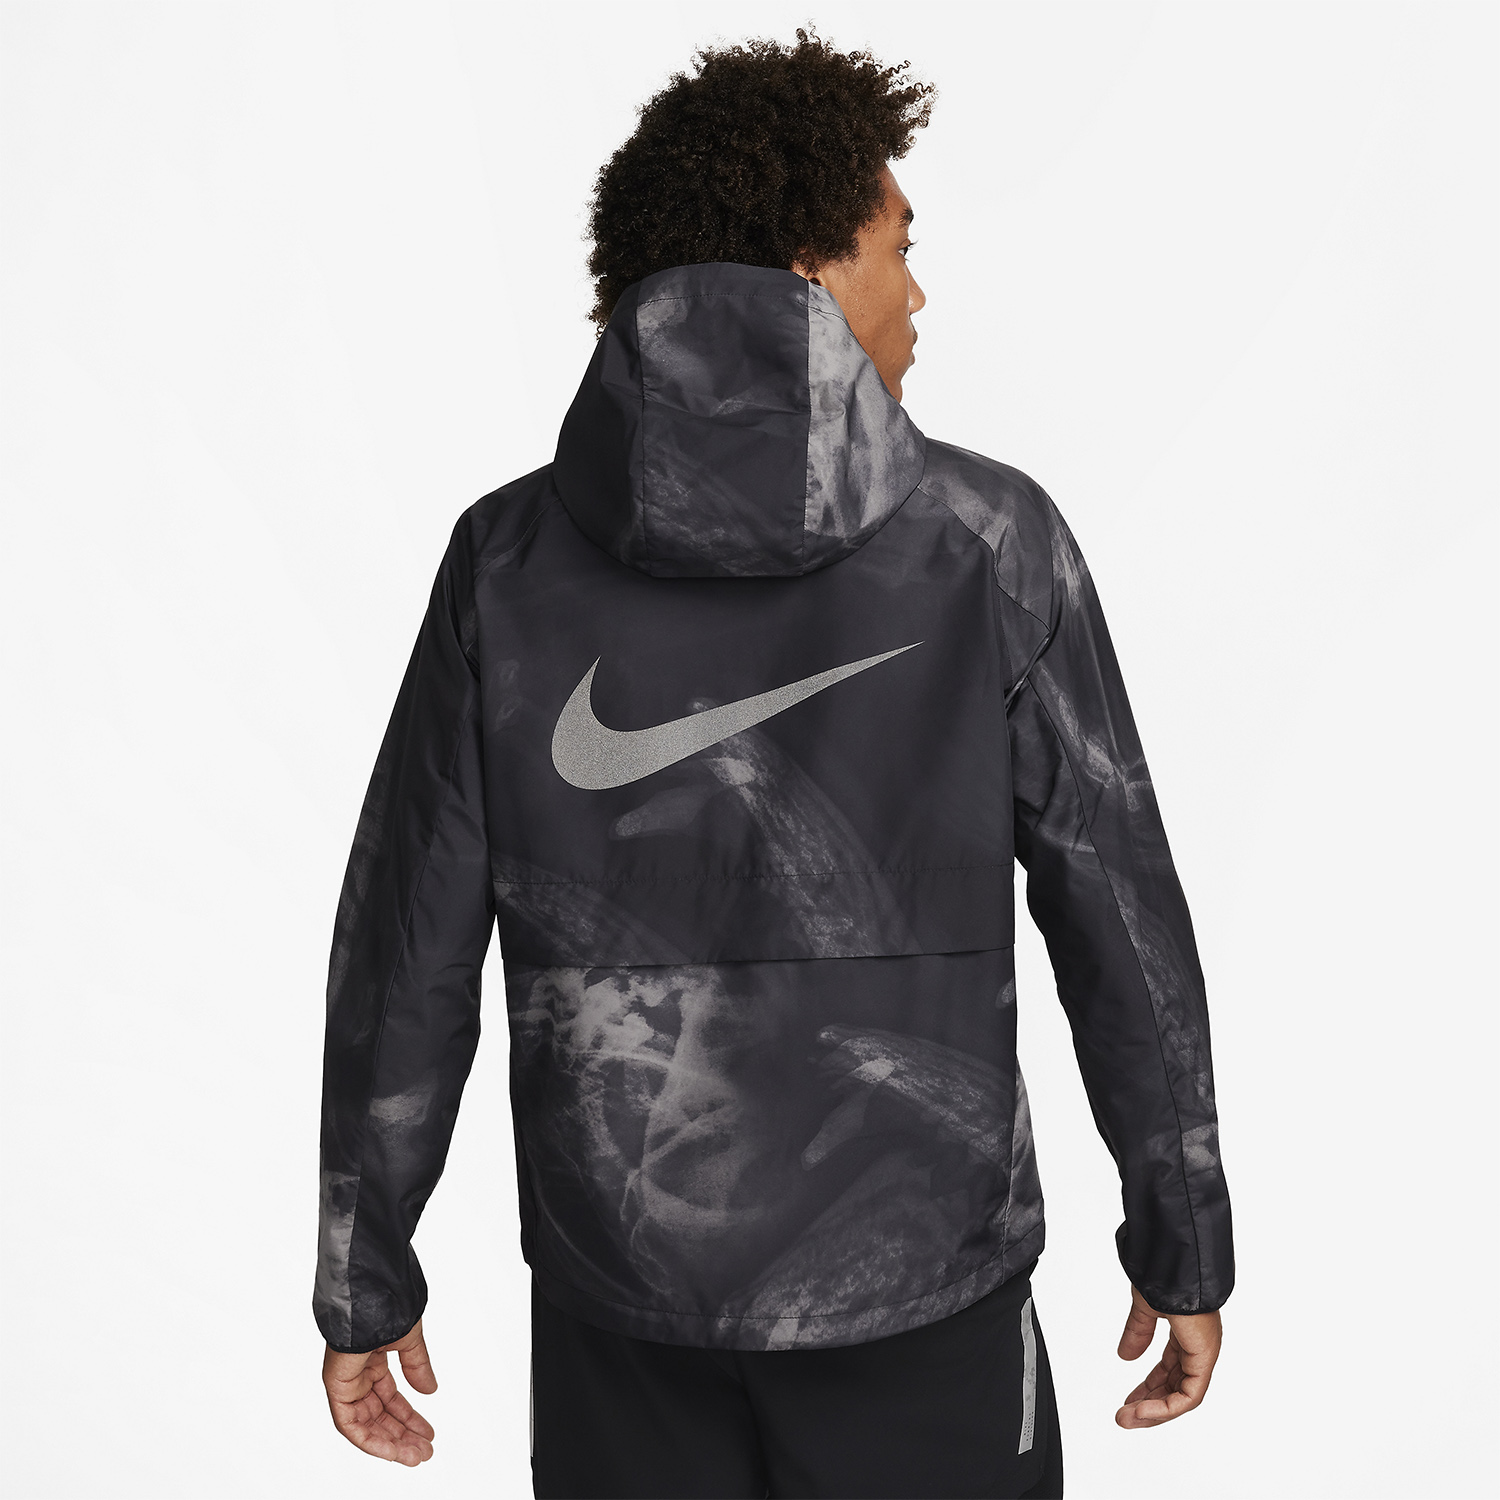 Nike Storm-FIT Run Division Men's Running Jacket - Black